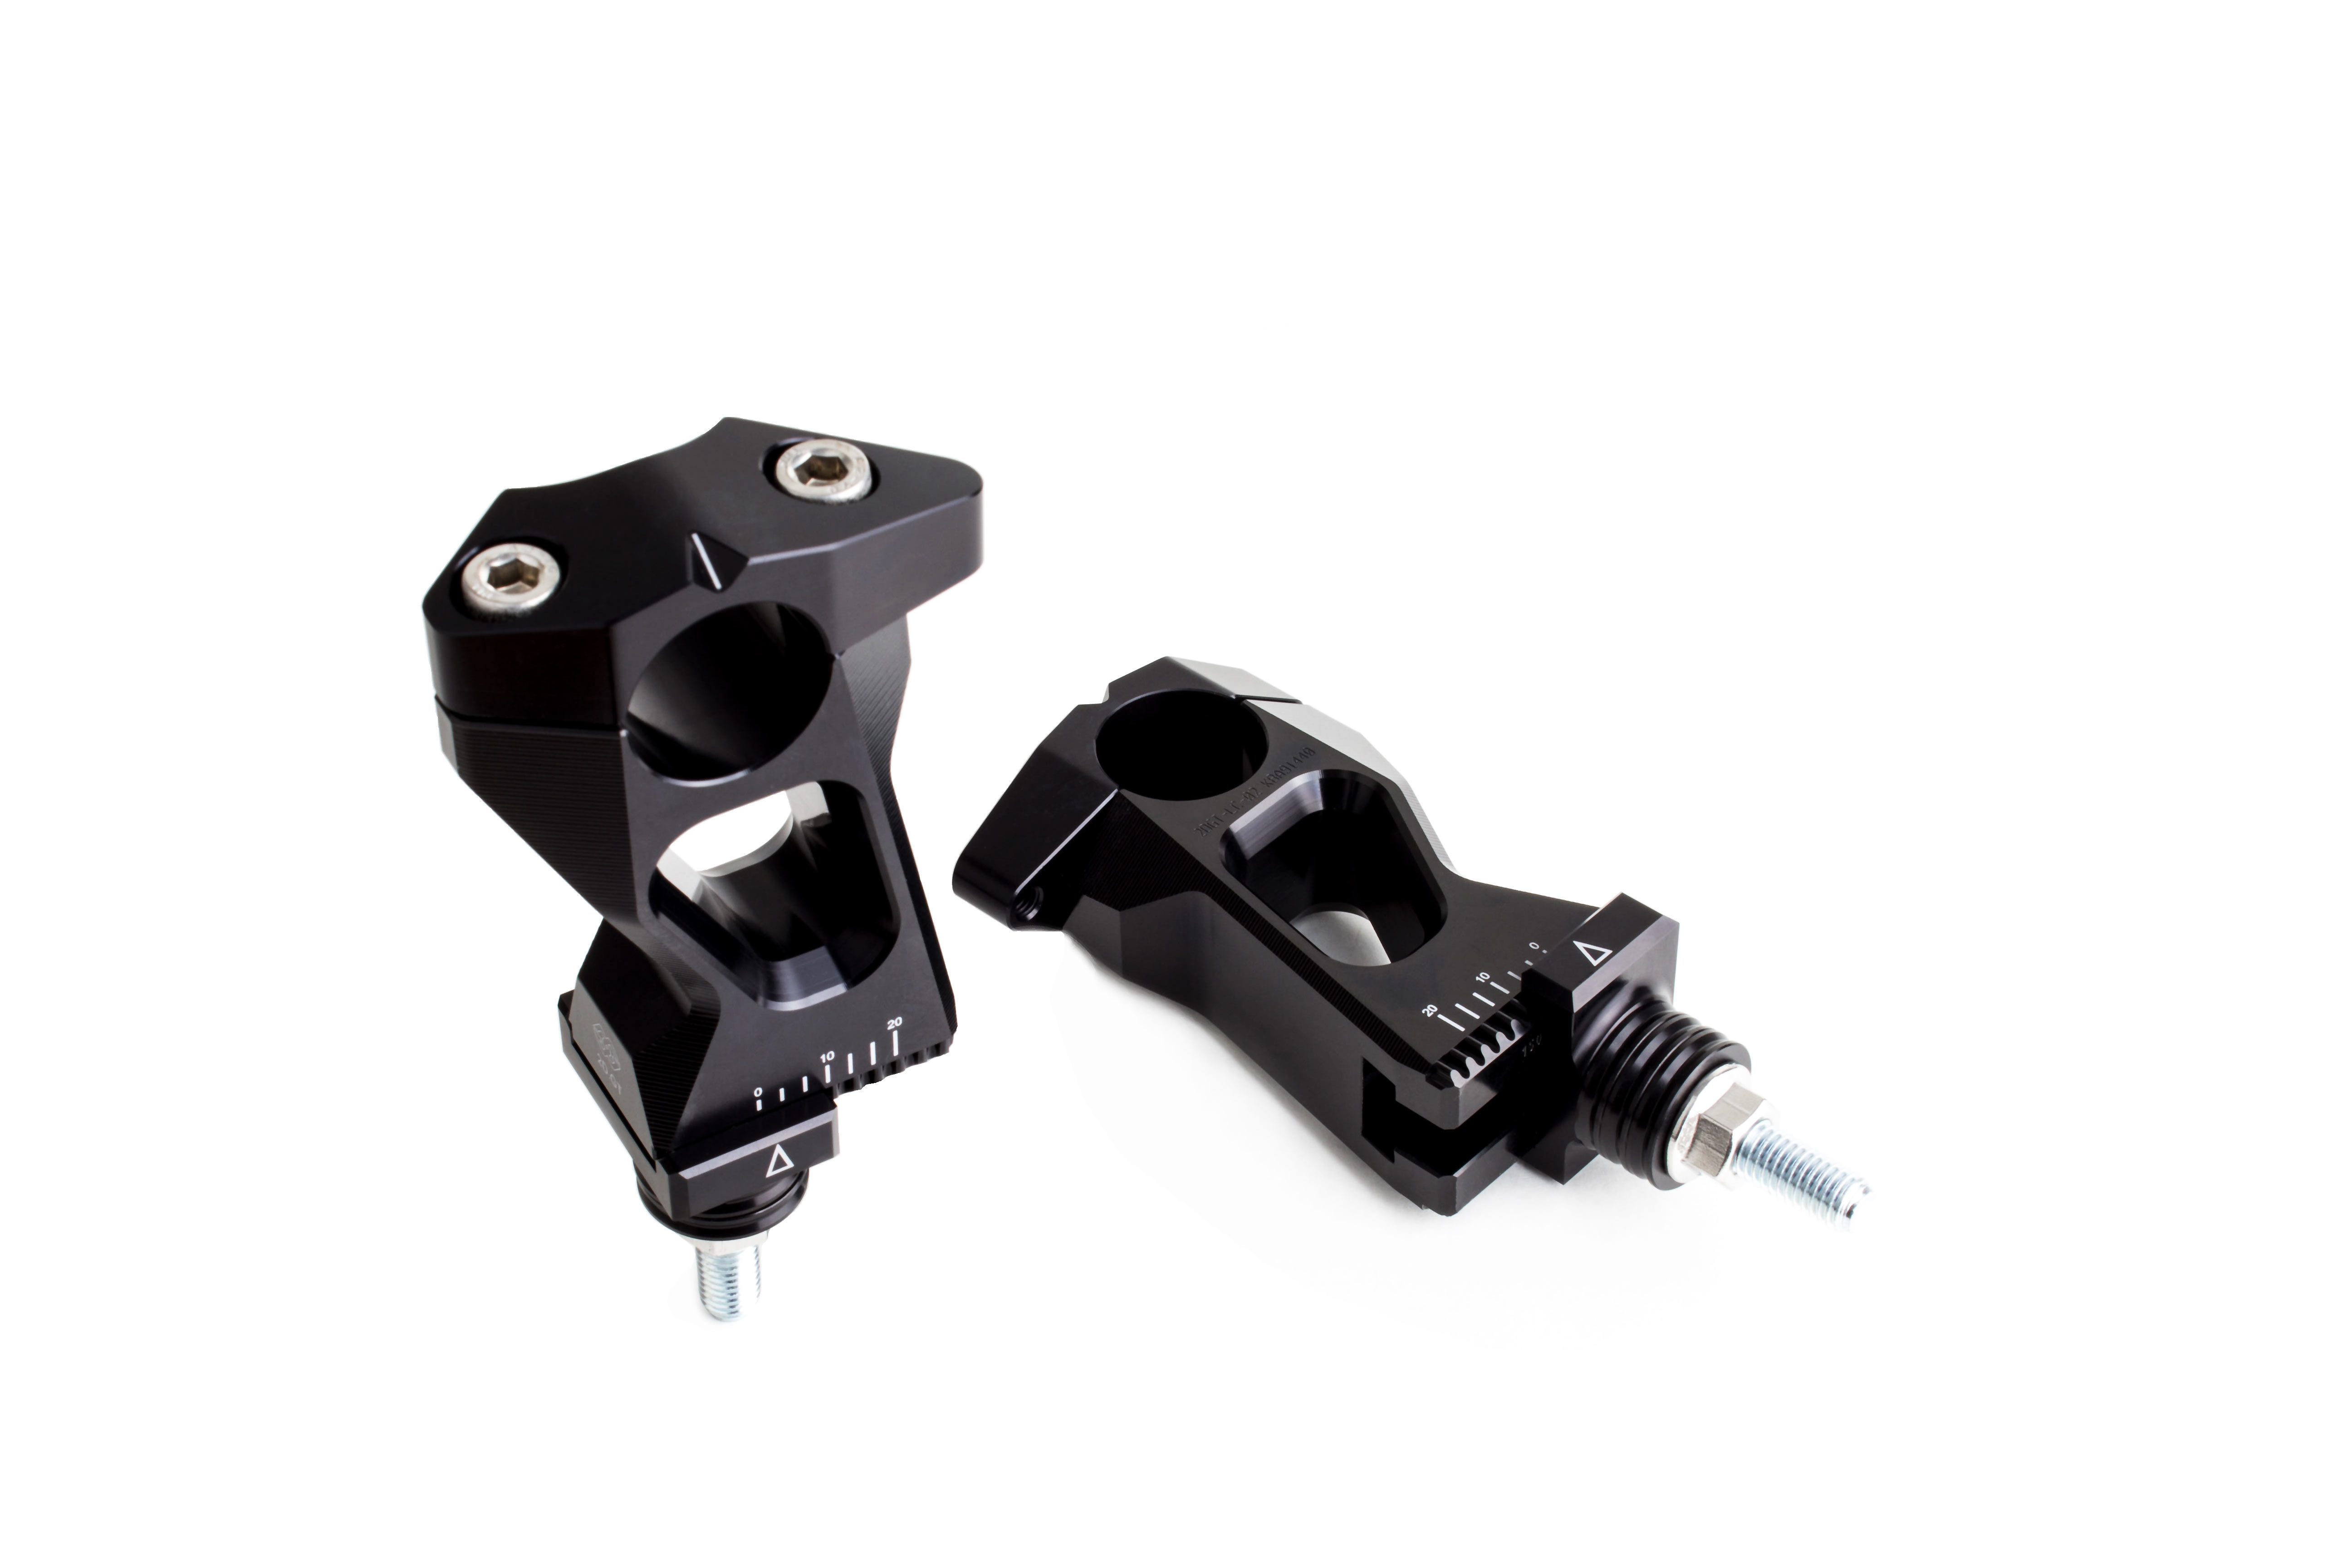 Diabolos support béquille 6 mm GSG MOTO Tuono V4 1100, MT-09, Tracer 900,  XSR125/900 aluminium - PAM RACING